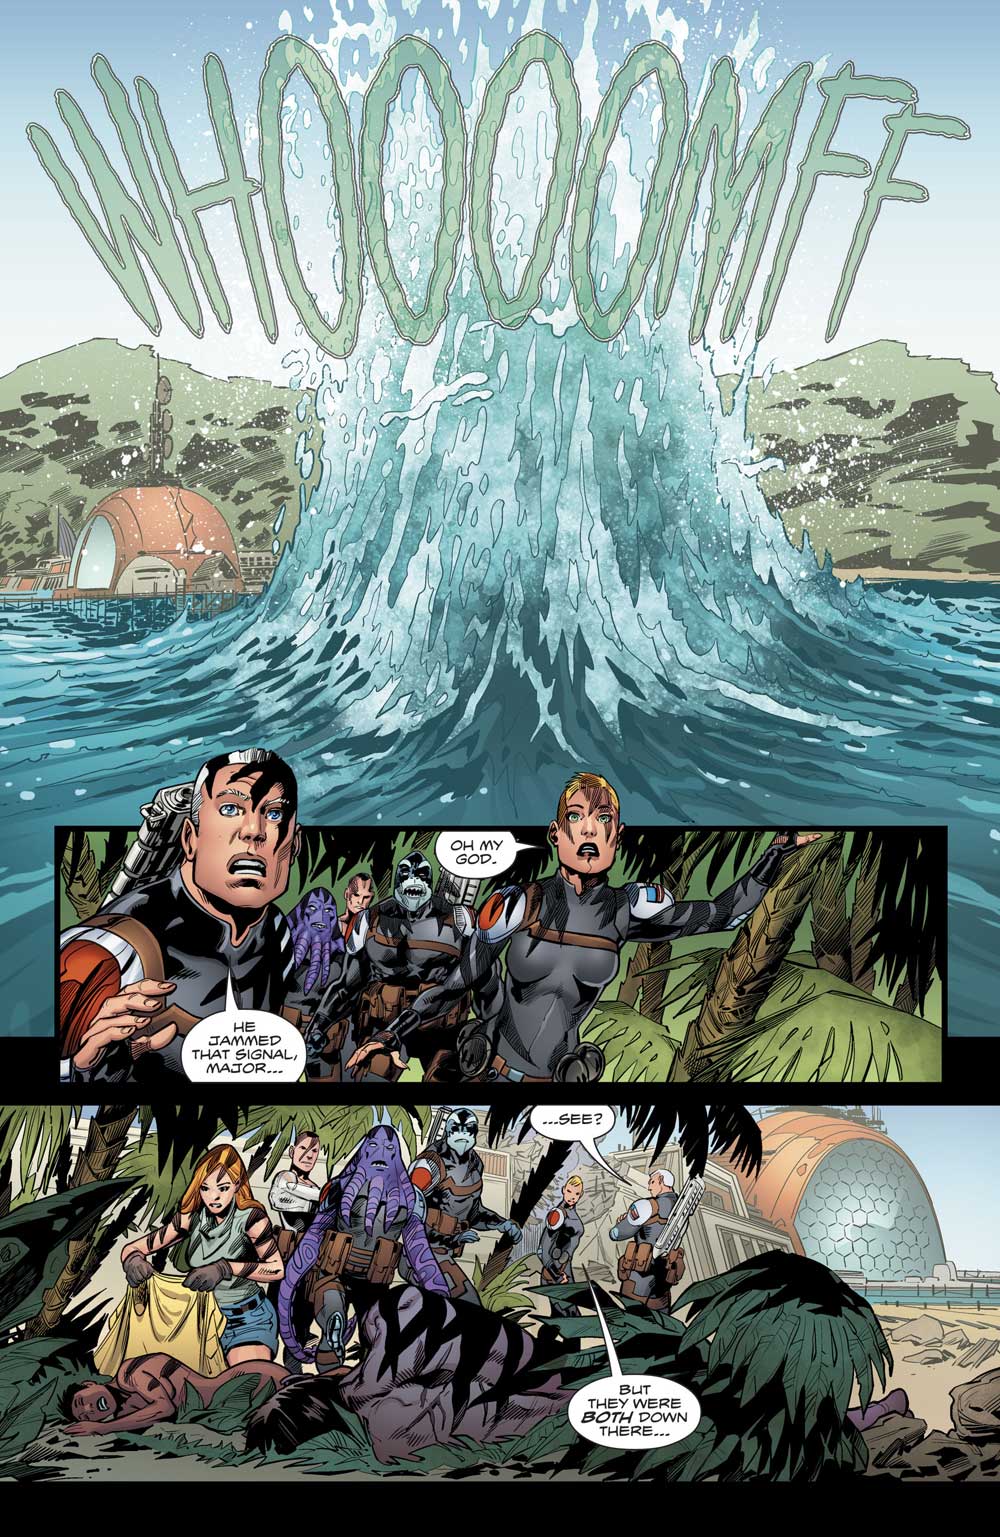 Aquaman #22 by Dan Abnett and Philippe Briones